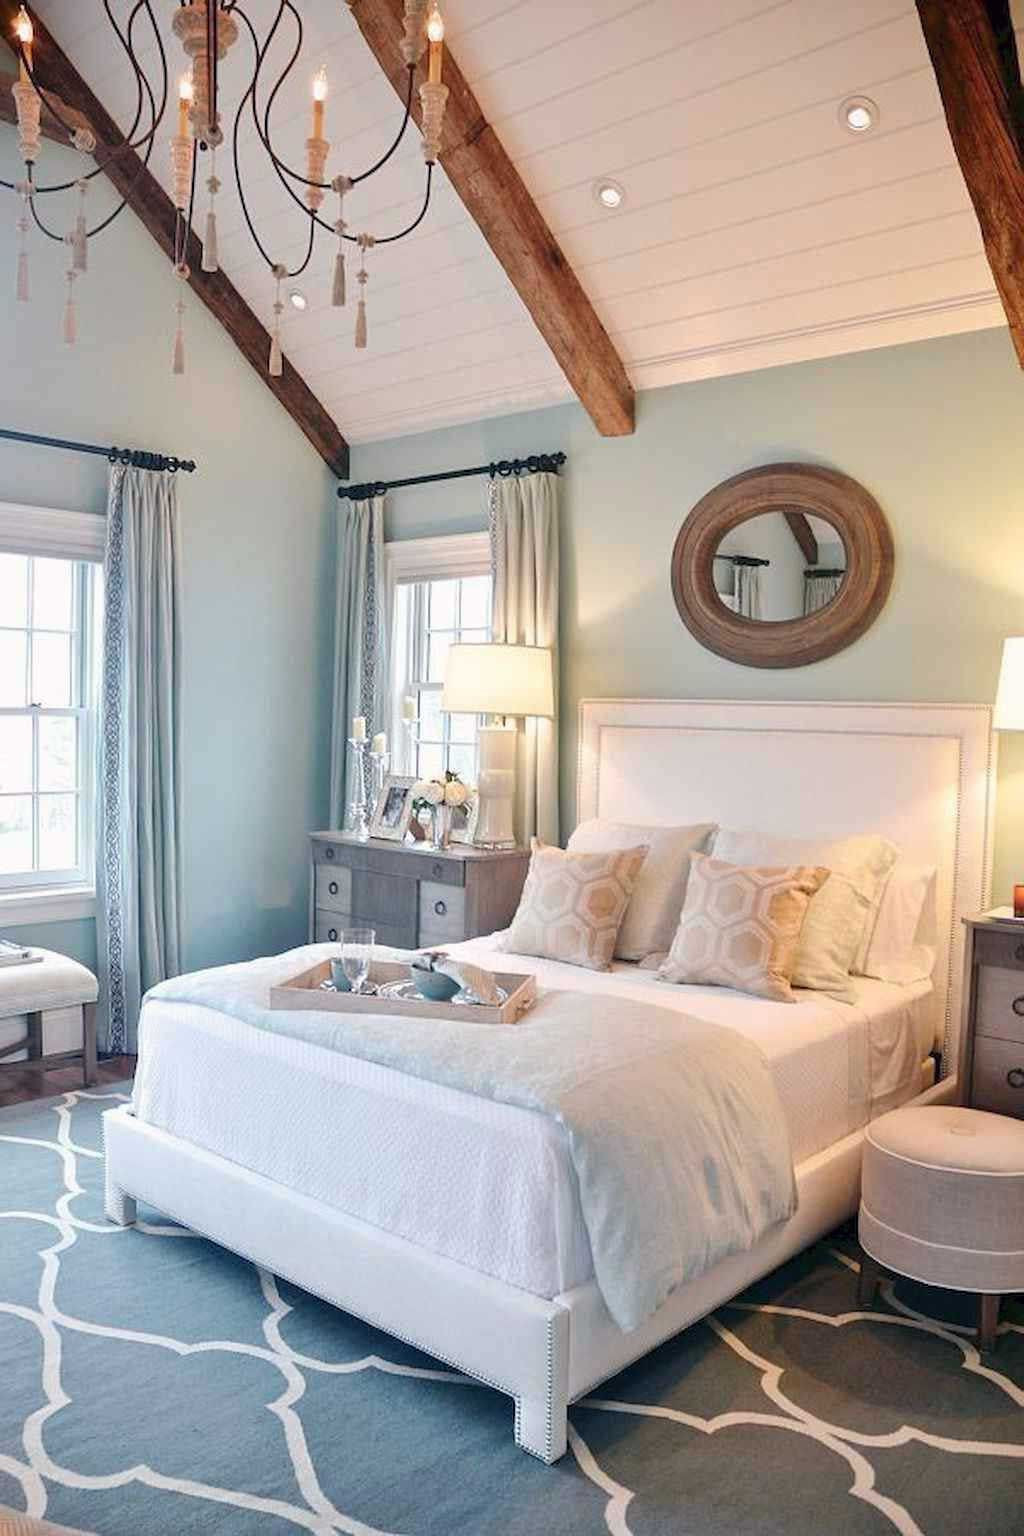 Rustic Bedroom Paint Colors
 Obtain More Magnificent Rustic Bedroom Paint Ideas 31